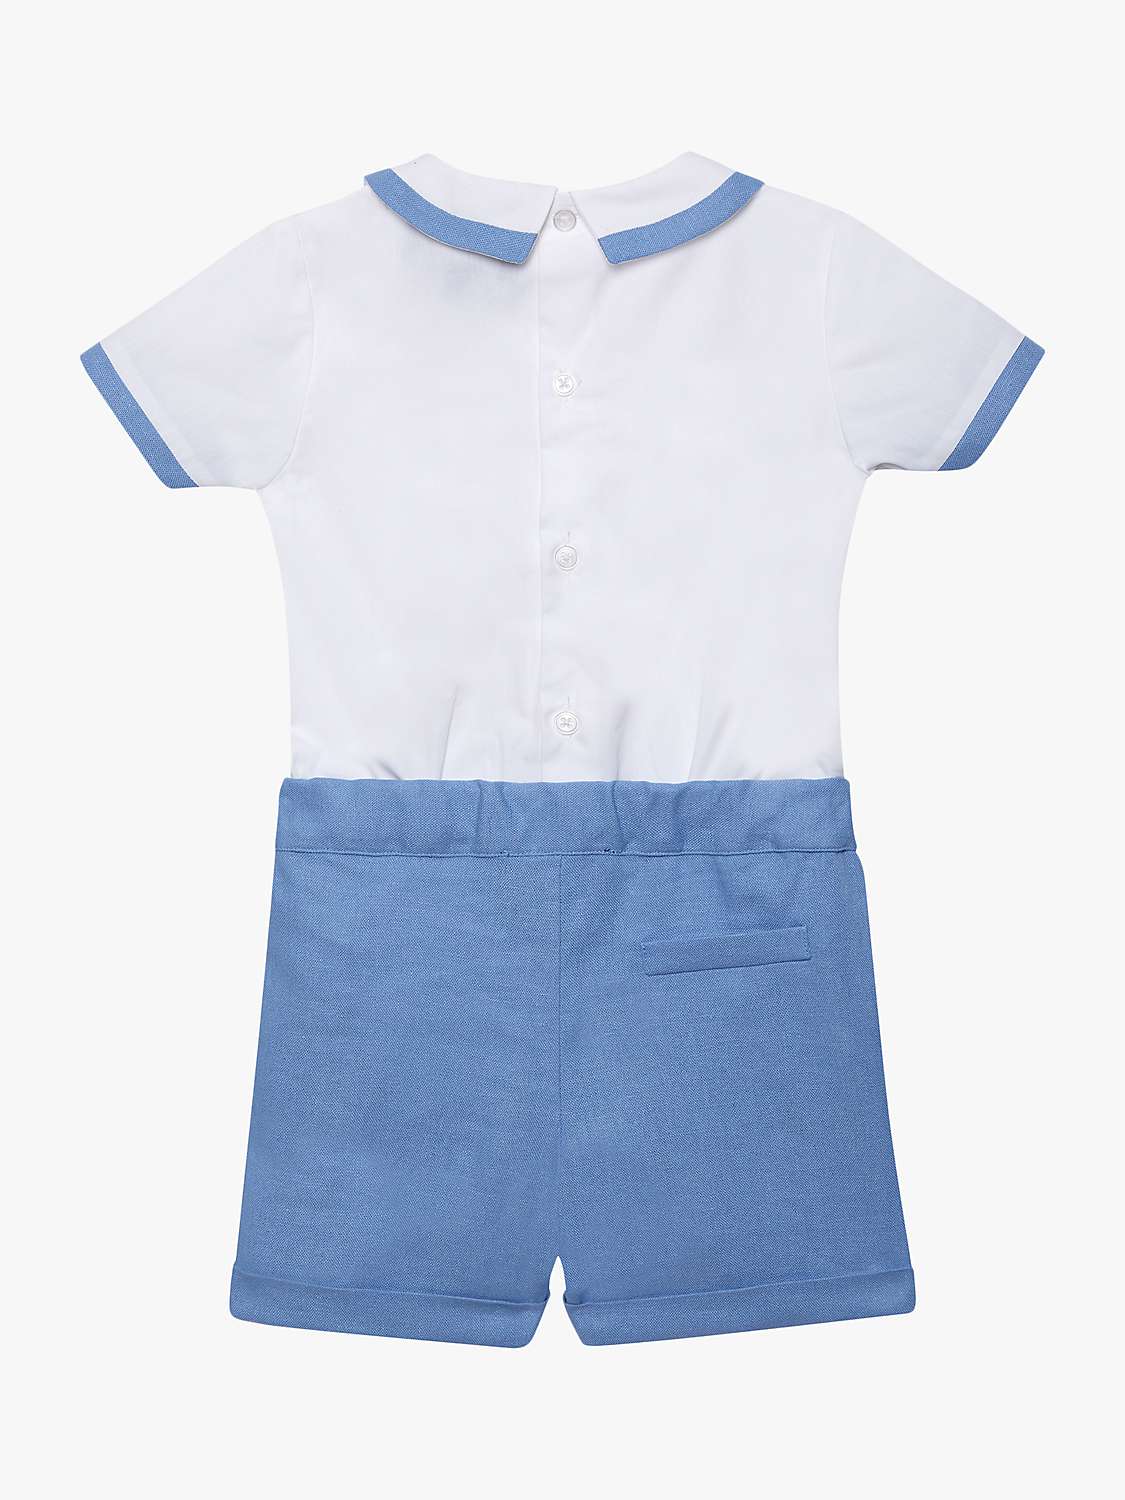 Buy Trotters Baby Rupert Linen Blend Short Sleeve & Shorts Set, French Blue/White Online at johnlewis.com